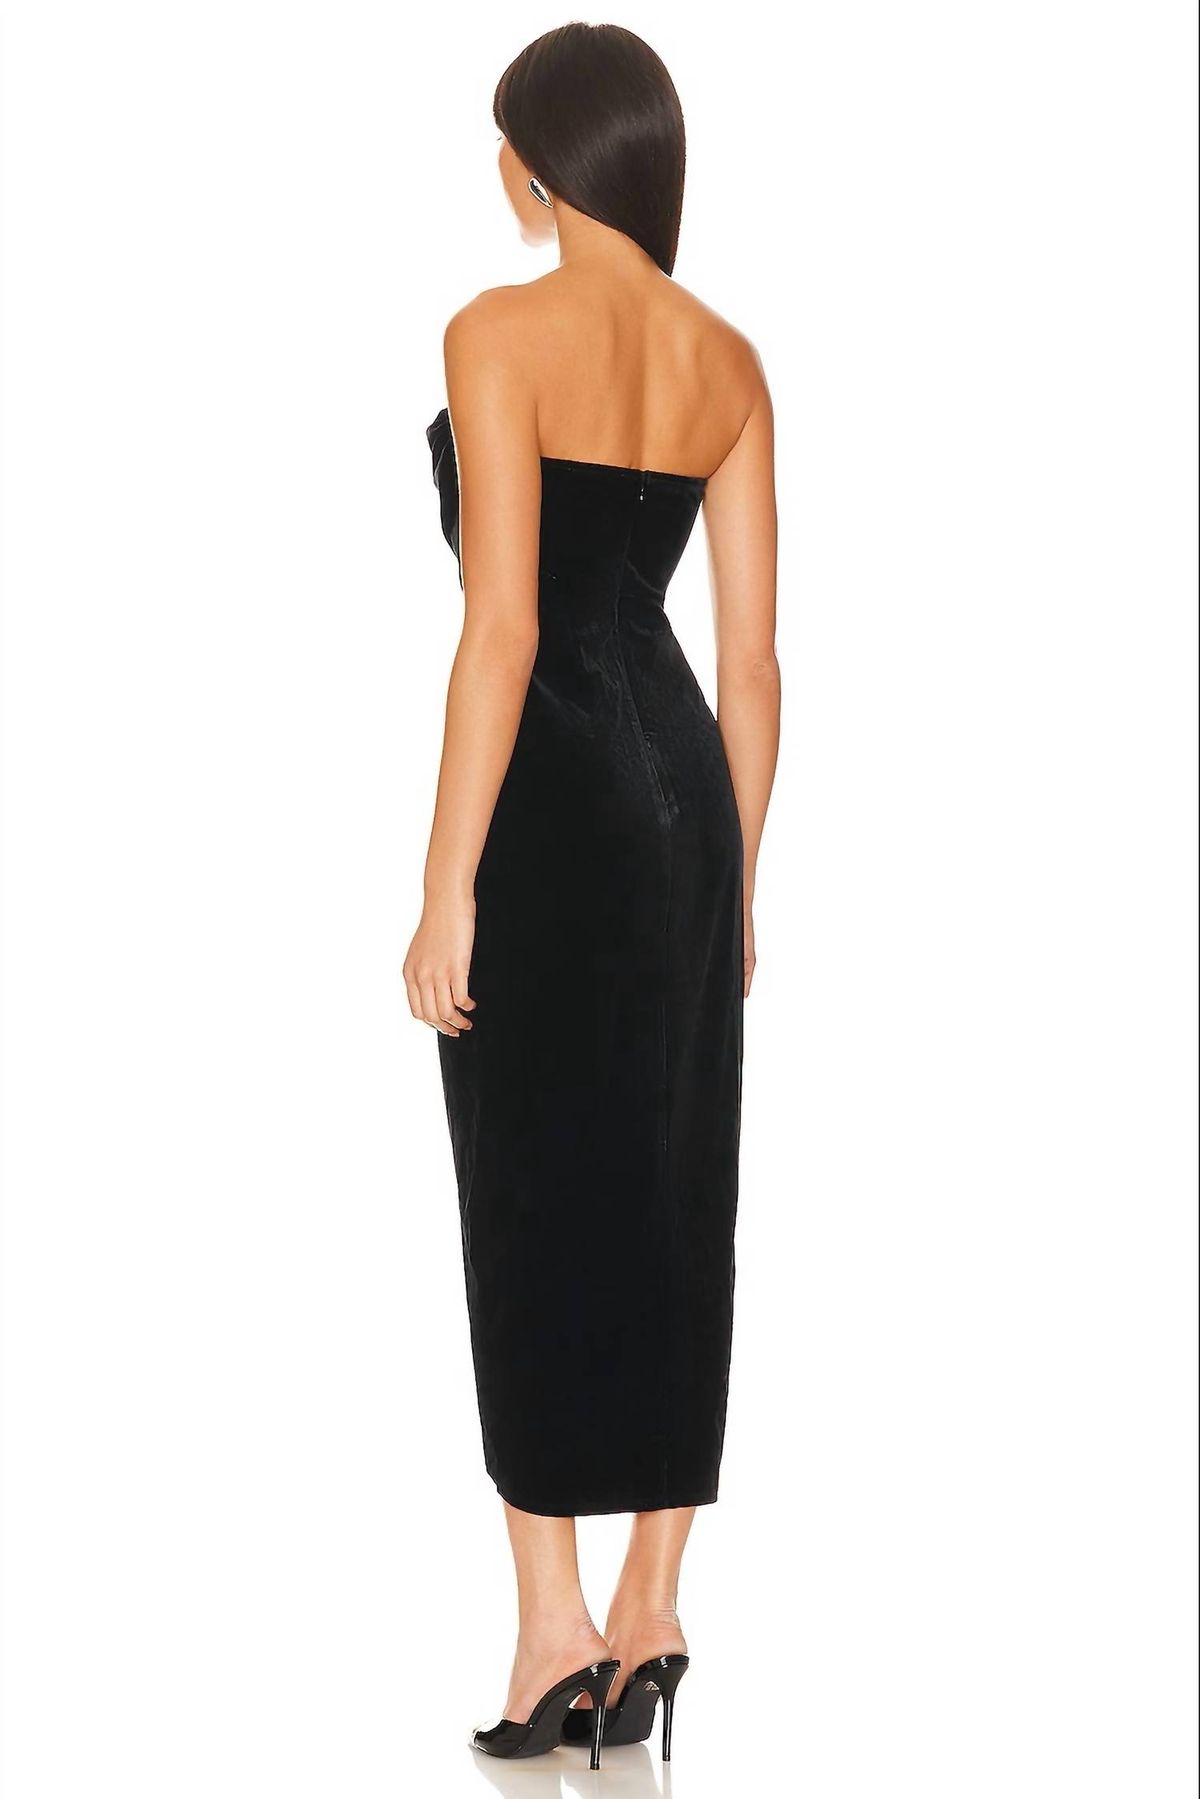 Style 1-1184961153-2901 ASTR Size M Velvet Black Cocktail Dress on Queenly